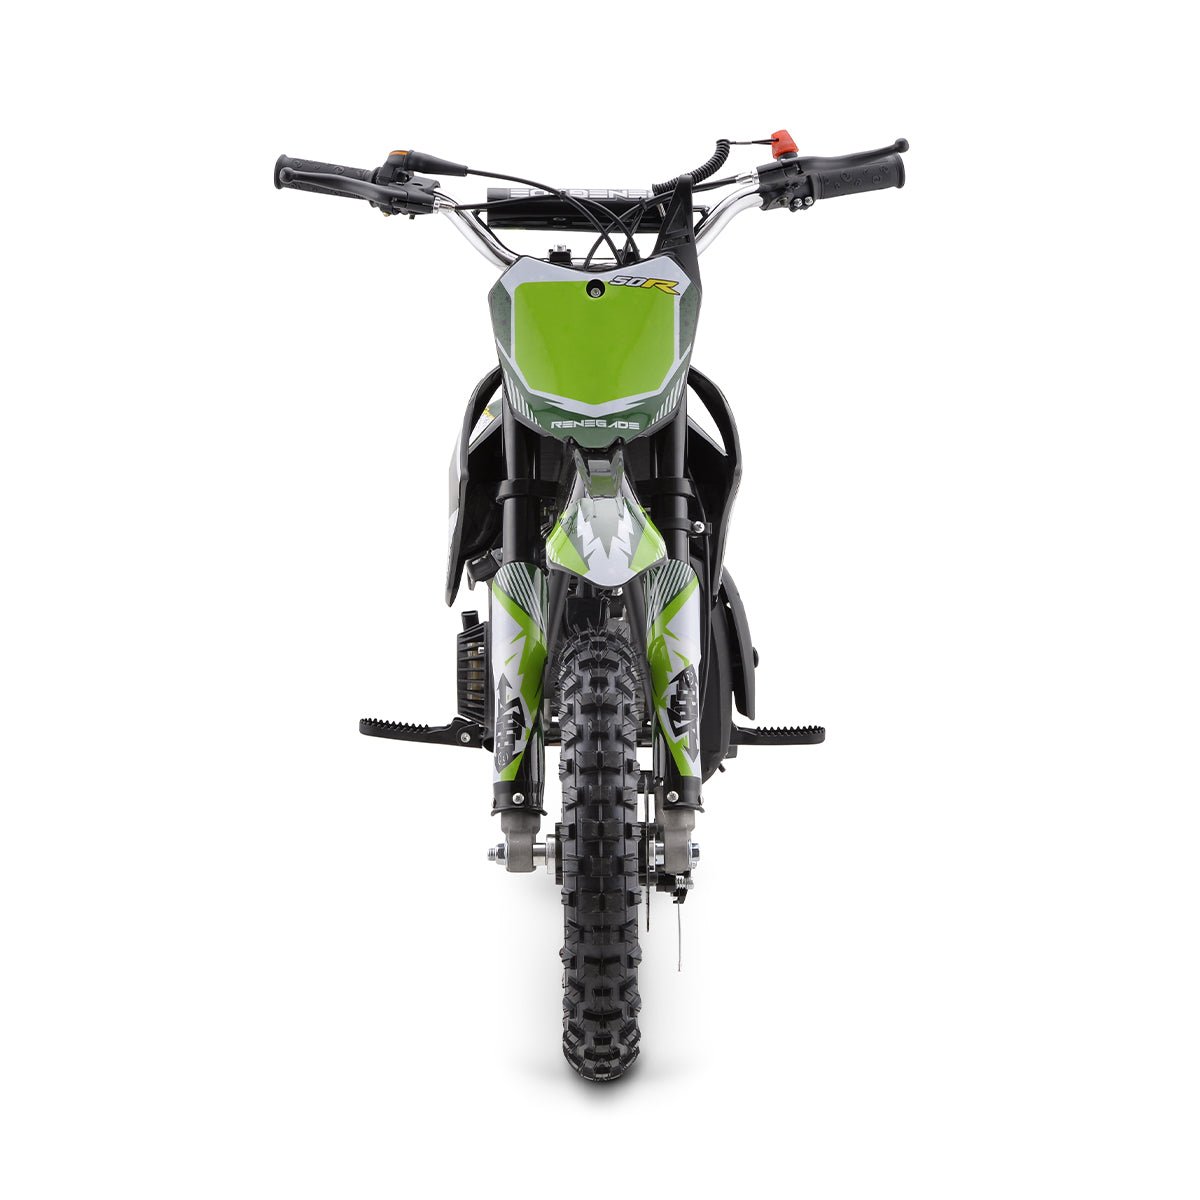 Renegade 50R 49cc Petrol Mini Dirt Bike - Green